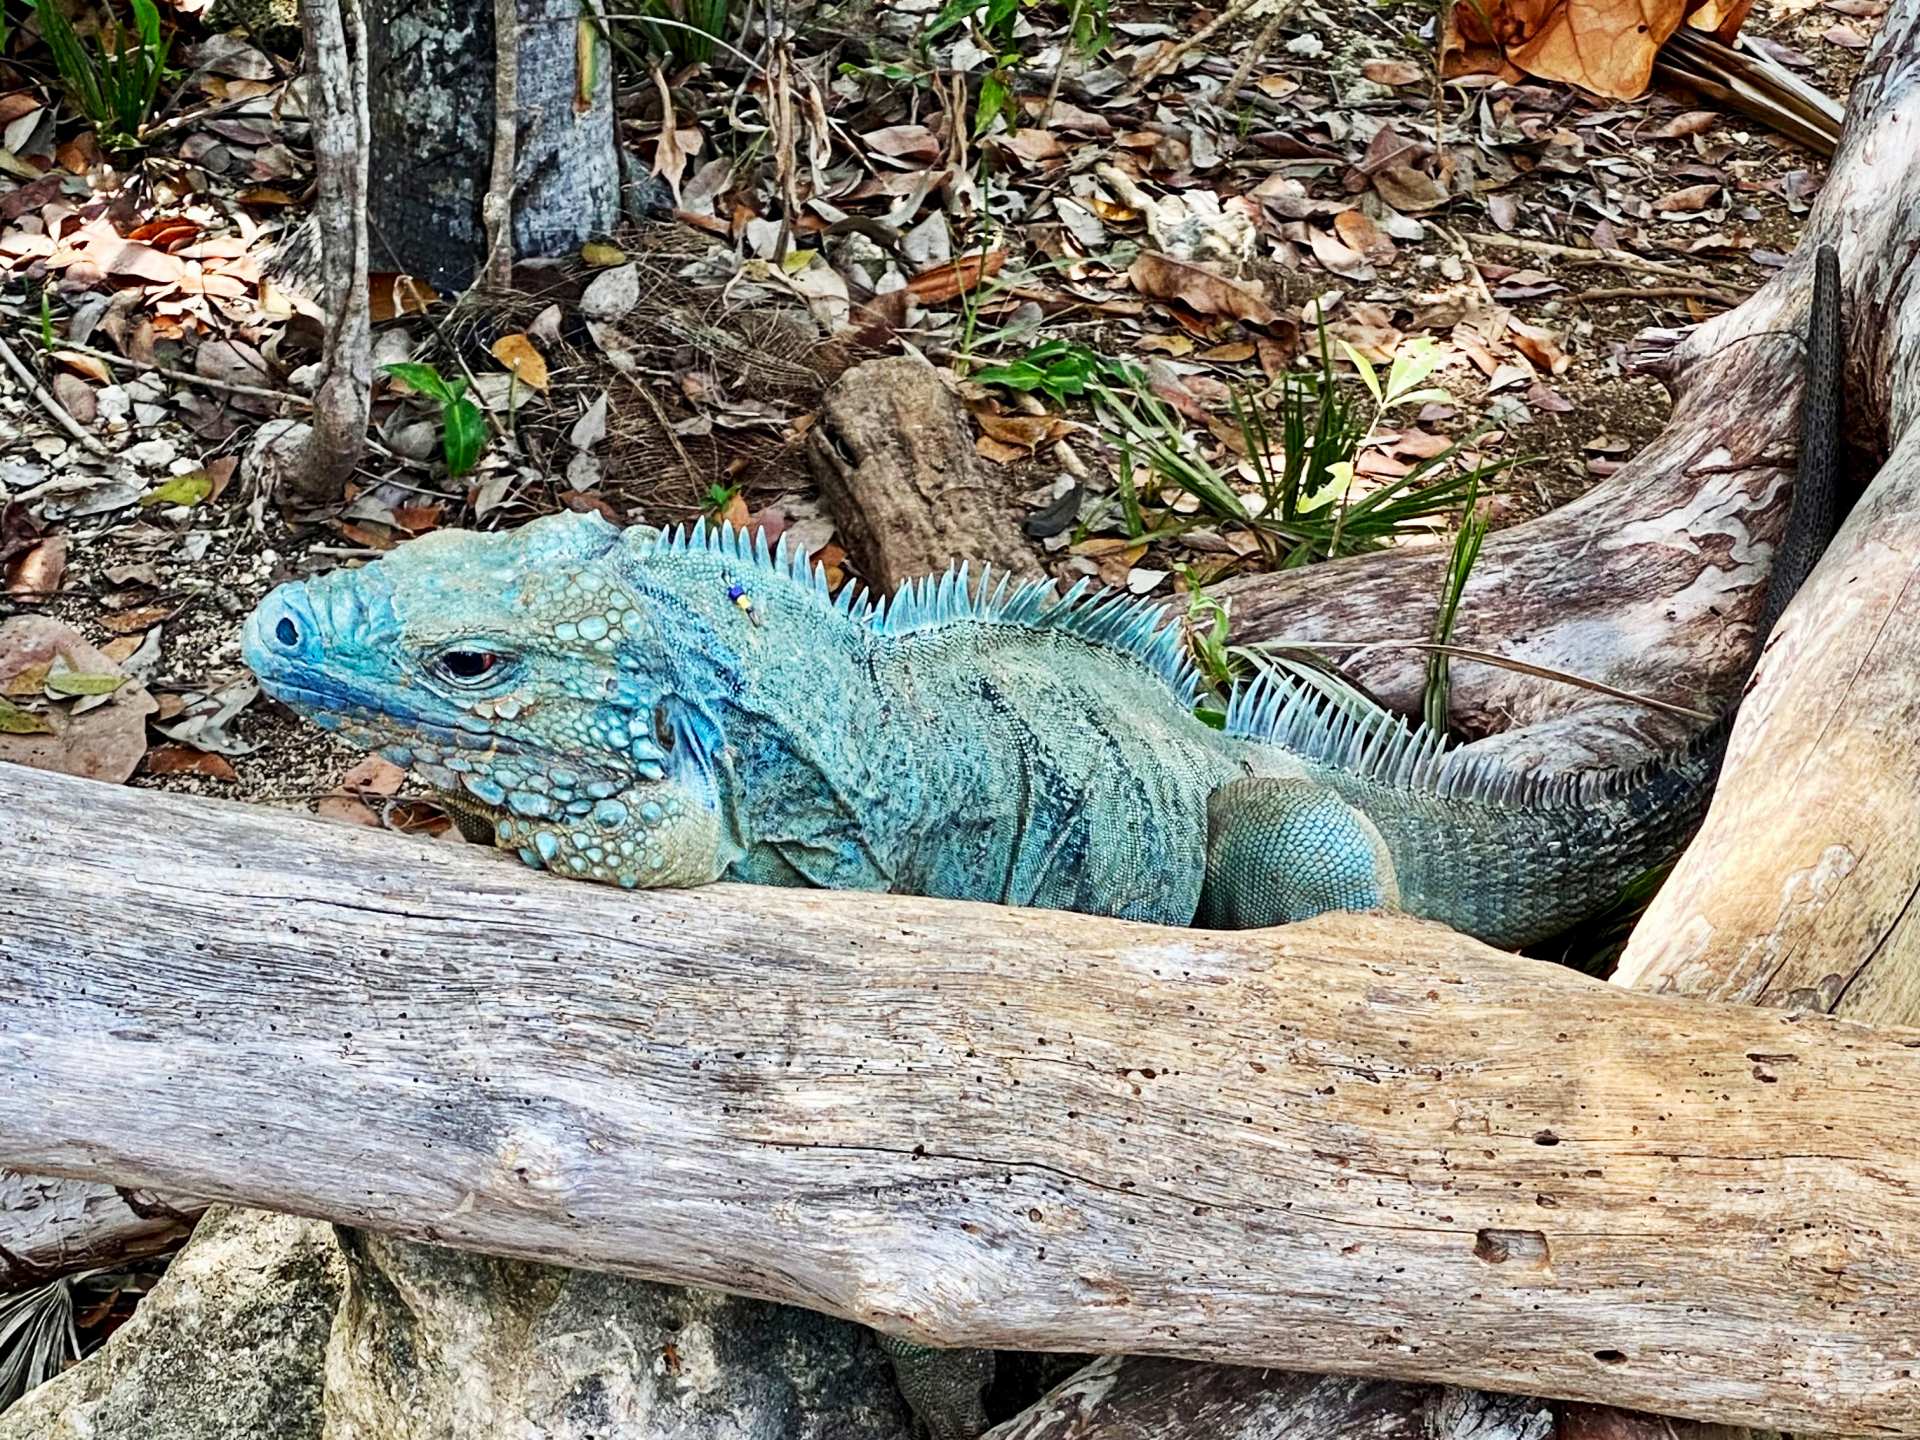 A blue iguana in the Cayman Islands